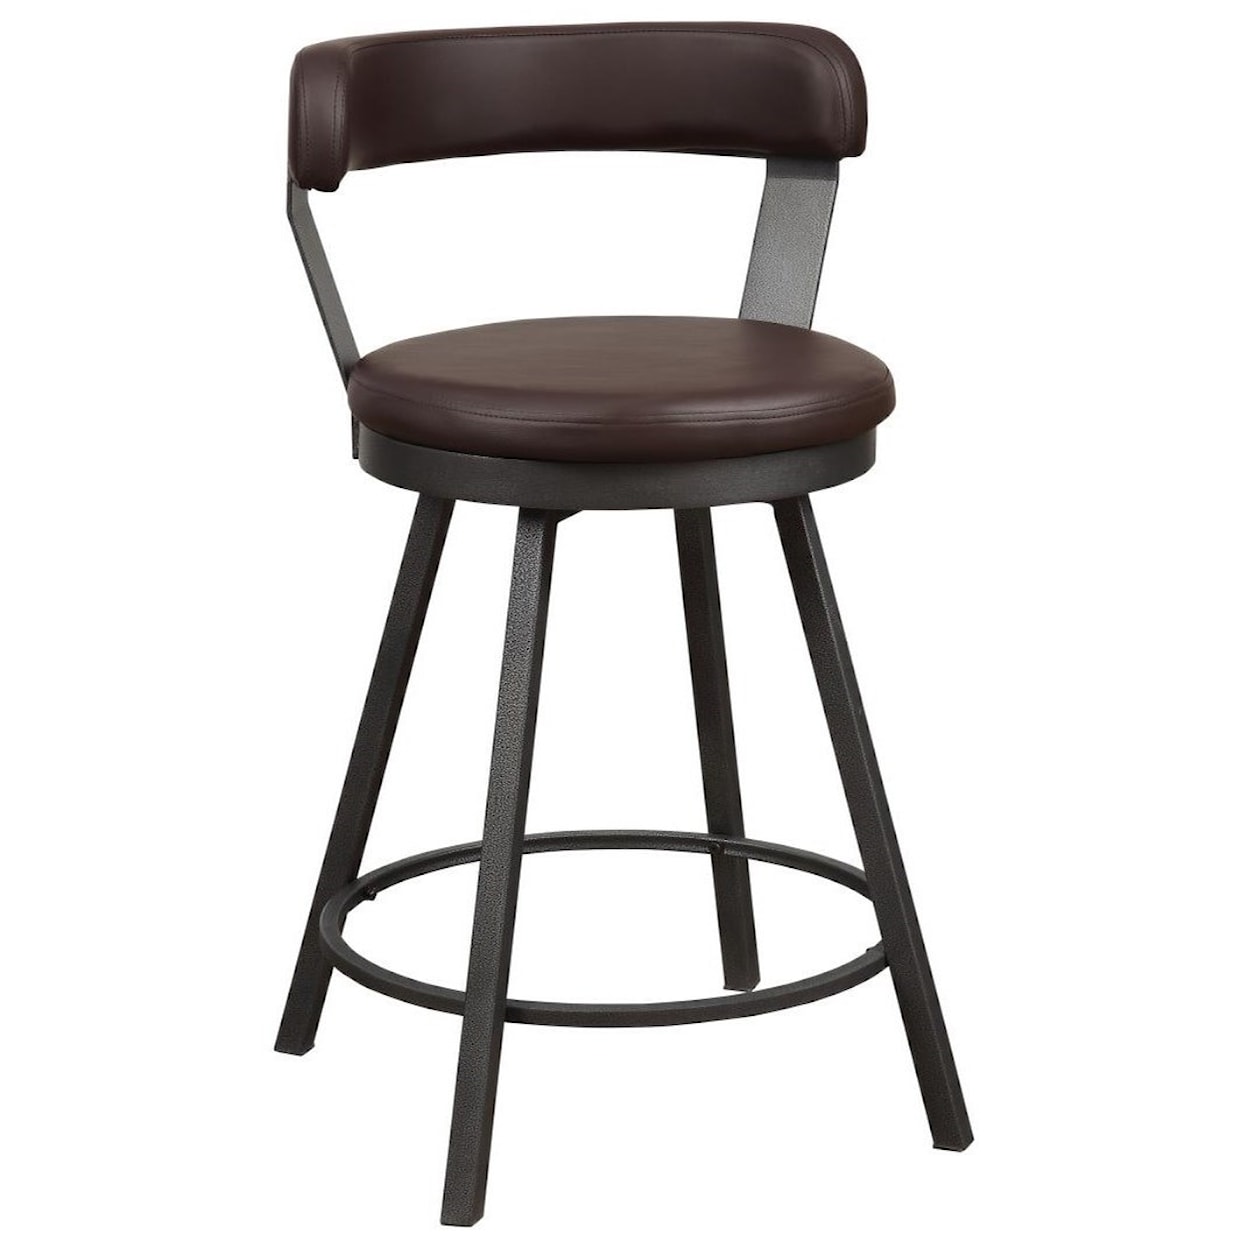 Homelegance Furniture Appert Swivel Counter Height Chair